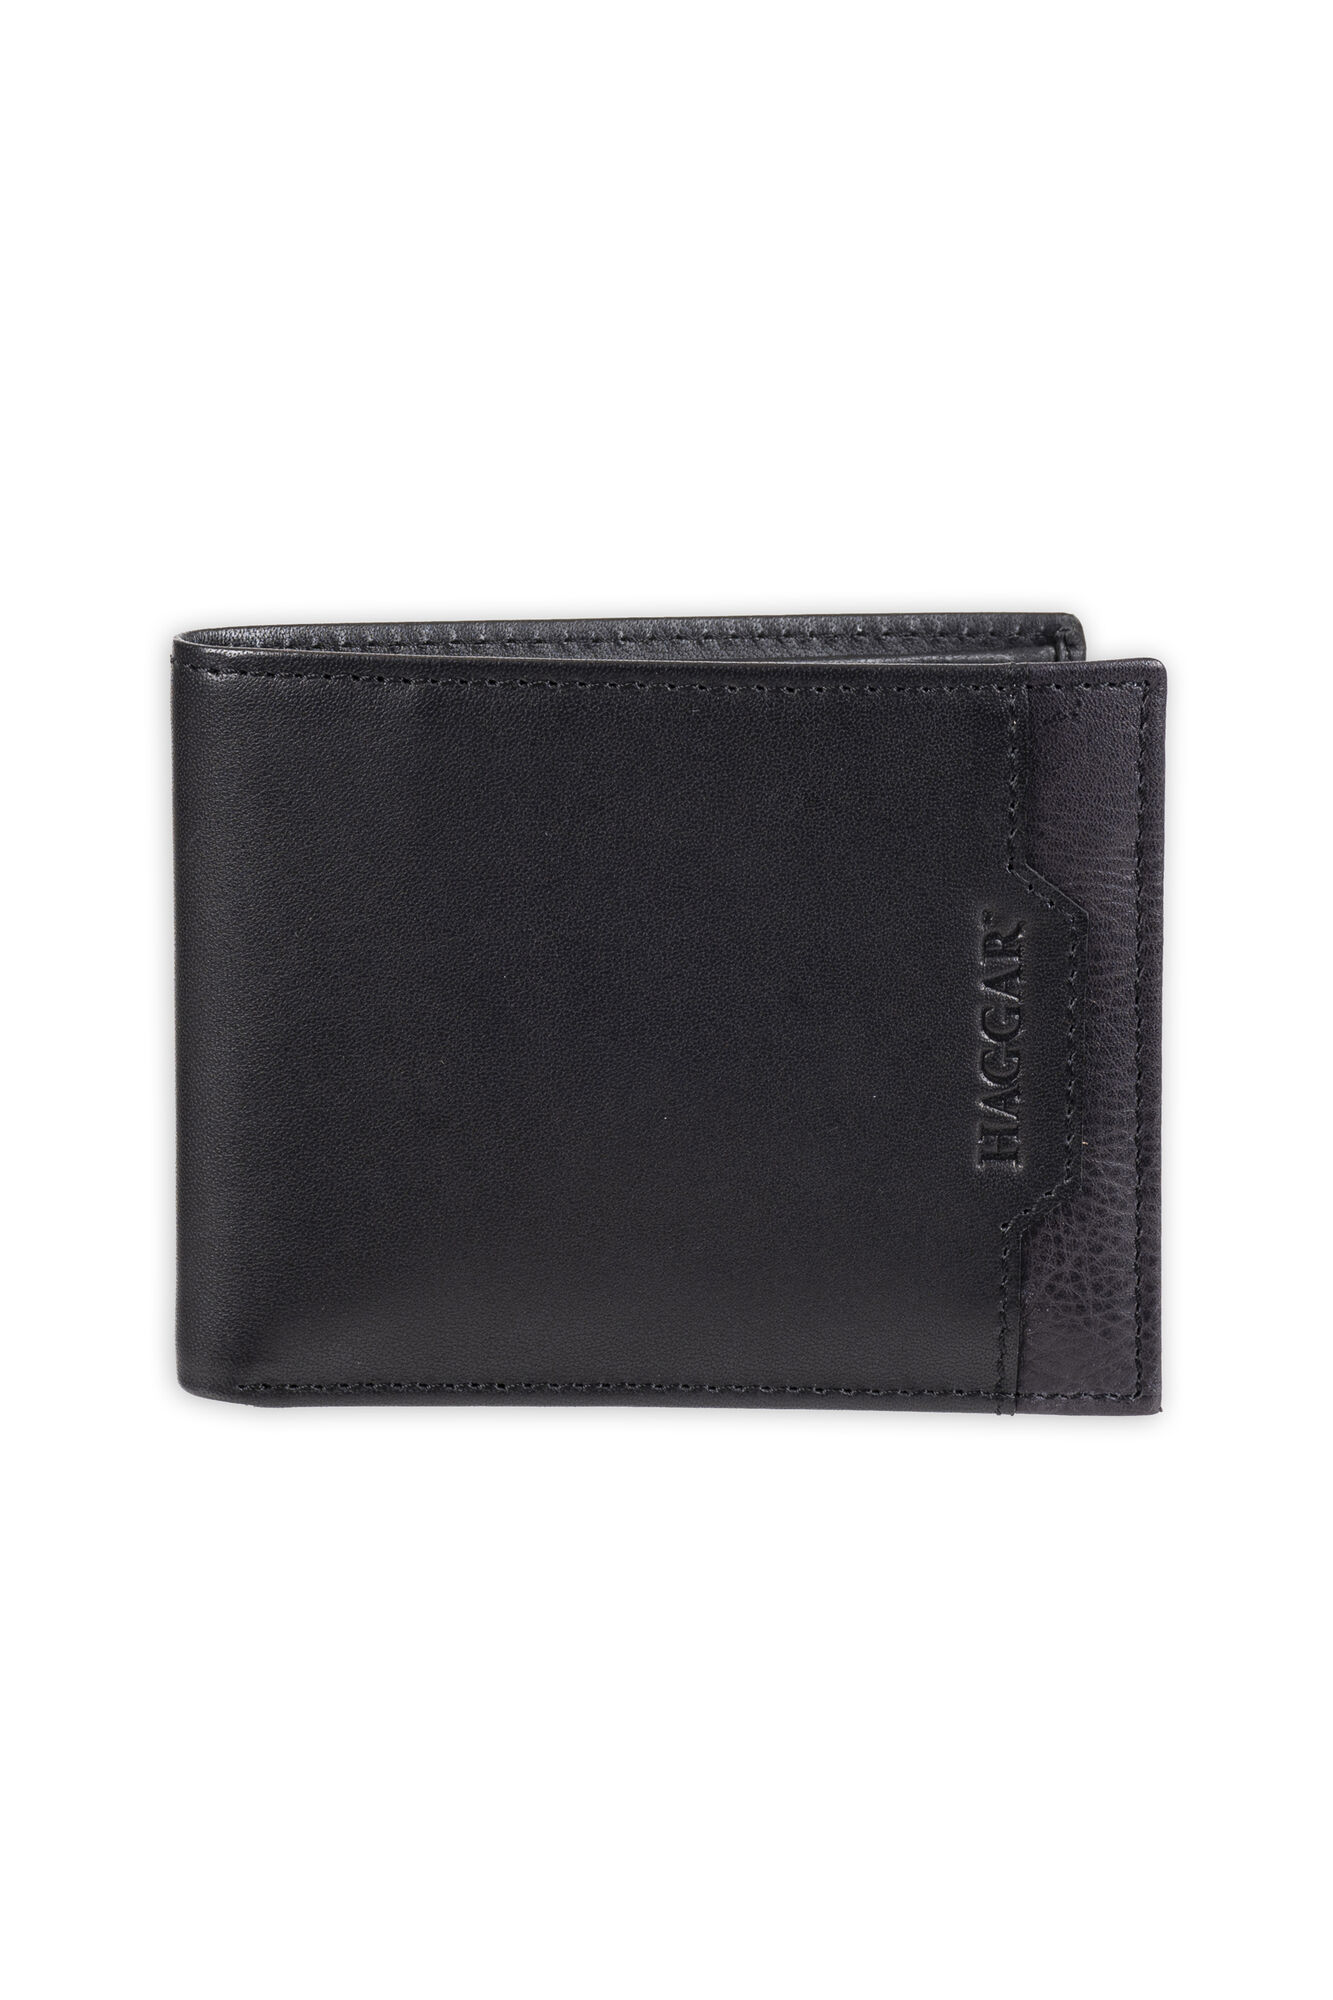 Haggar Coleshire Pocketmate Wallet Black (31HH140001) photo